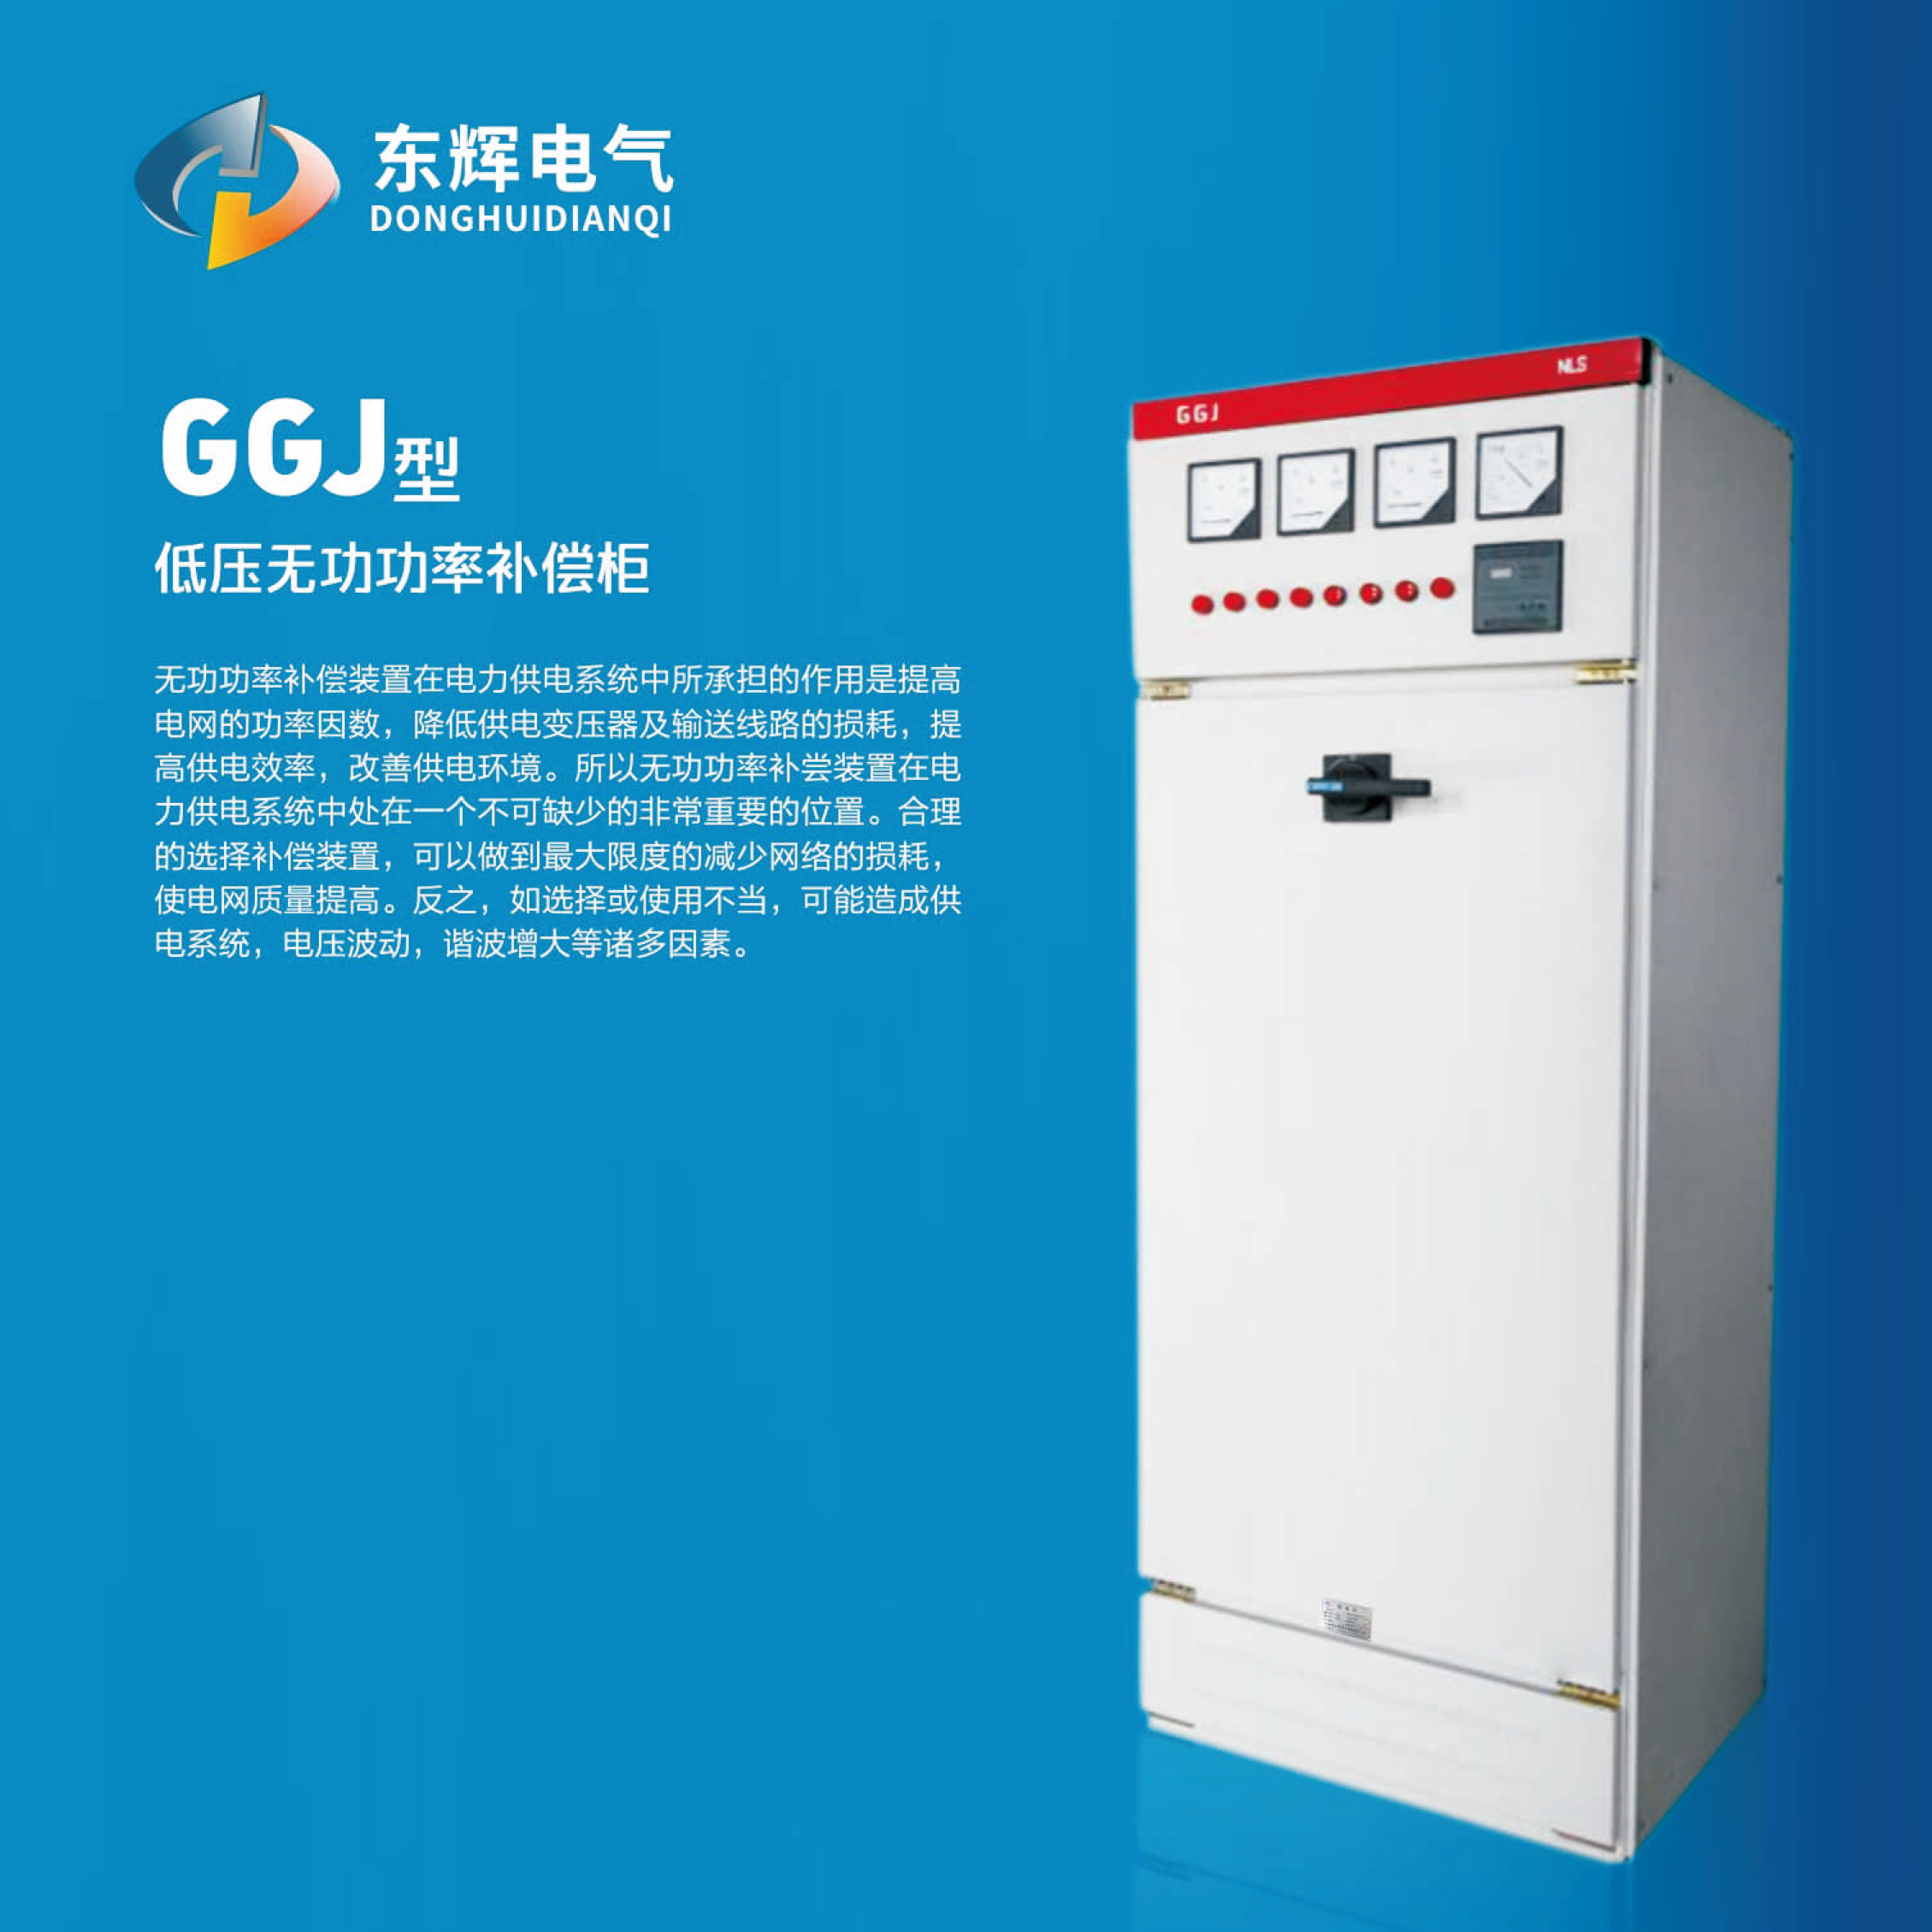 GGJ型低壓無功率補償柜